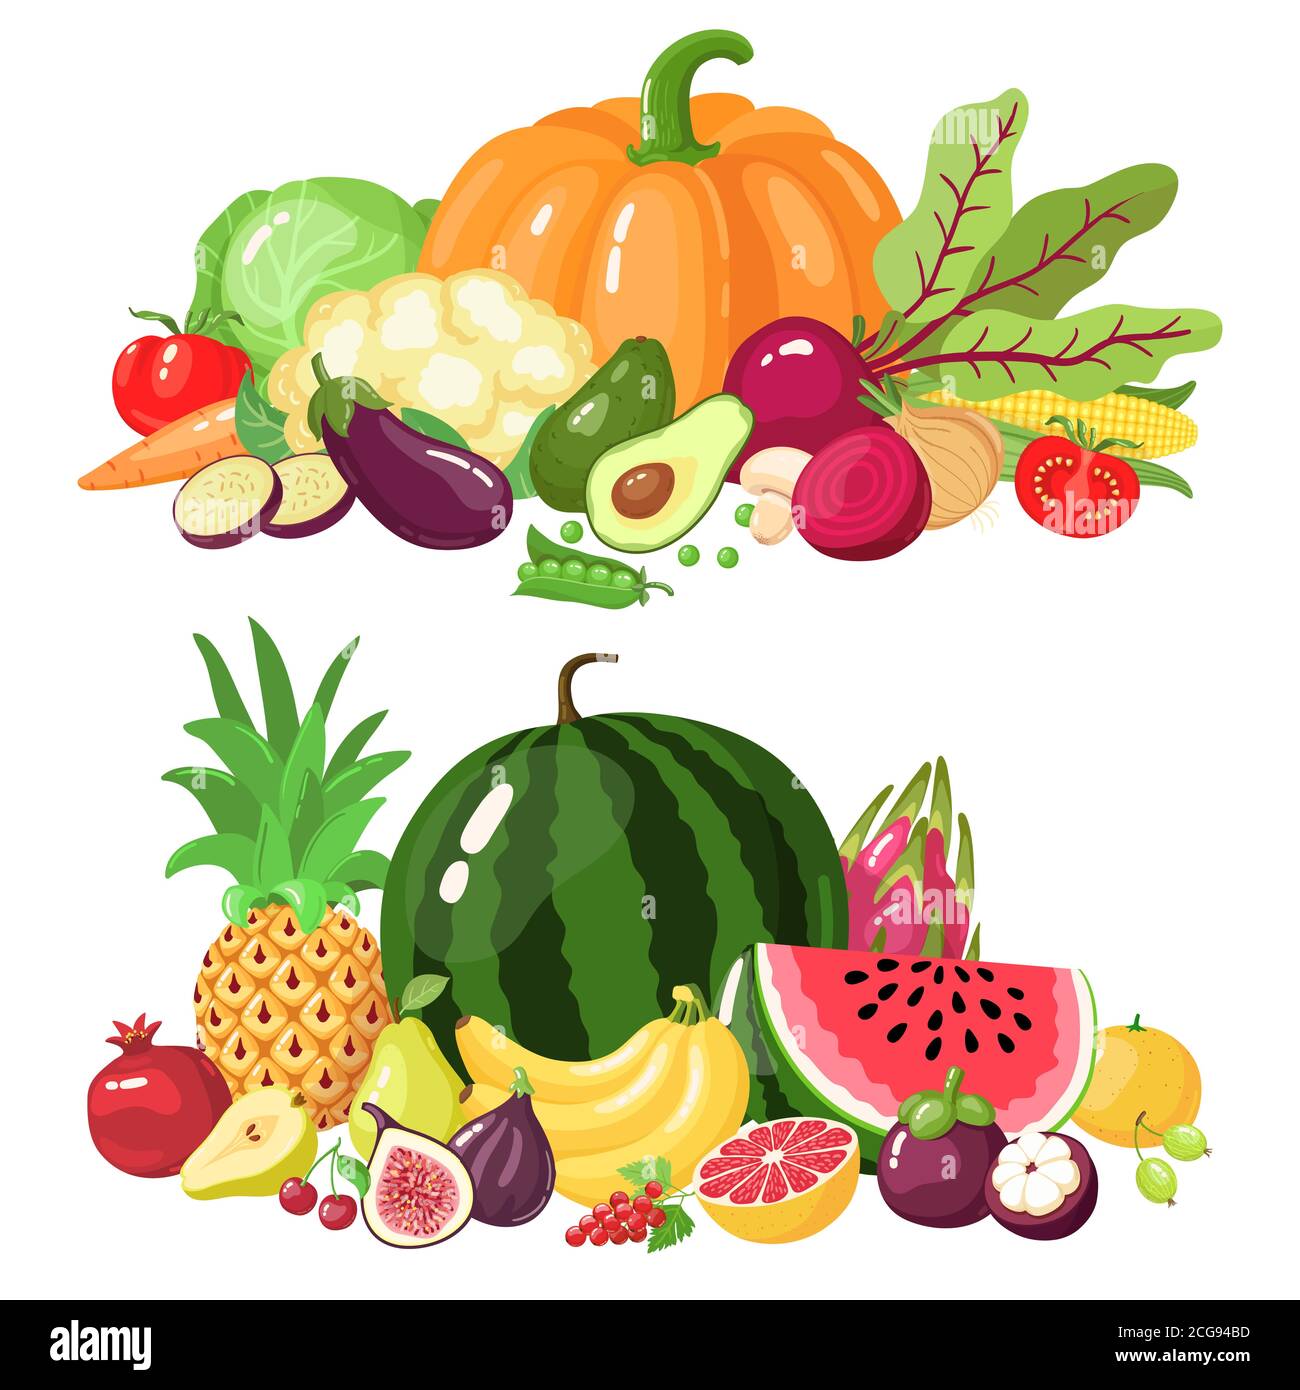 Vegetables and fruits. Cartoon vegetarian food, watermelon, pumpkin and